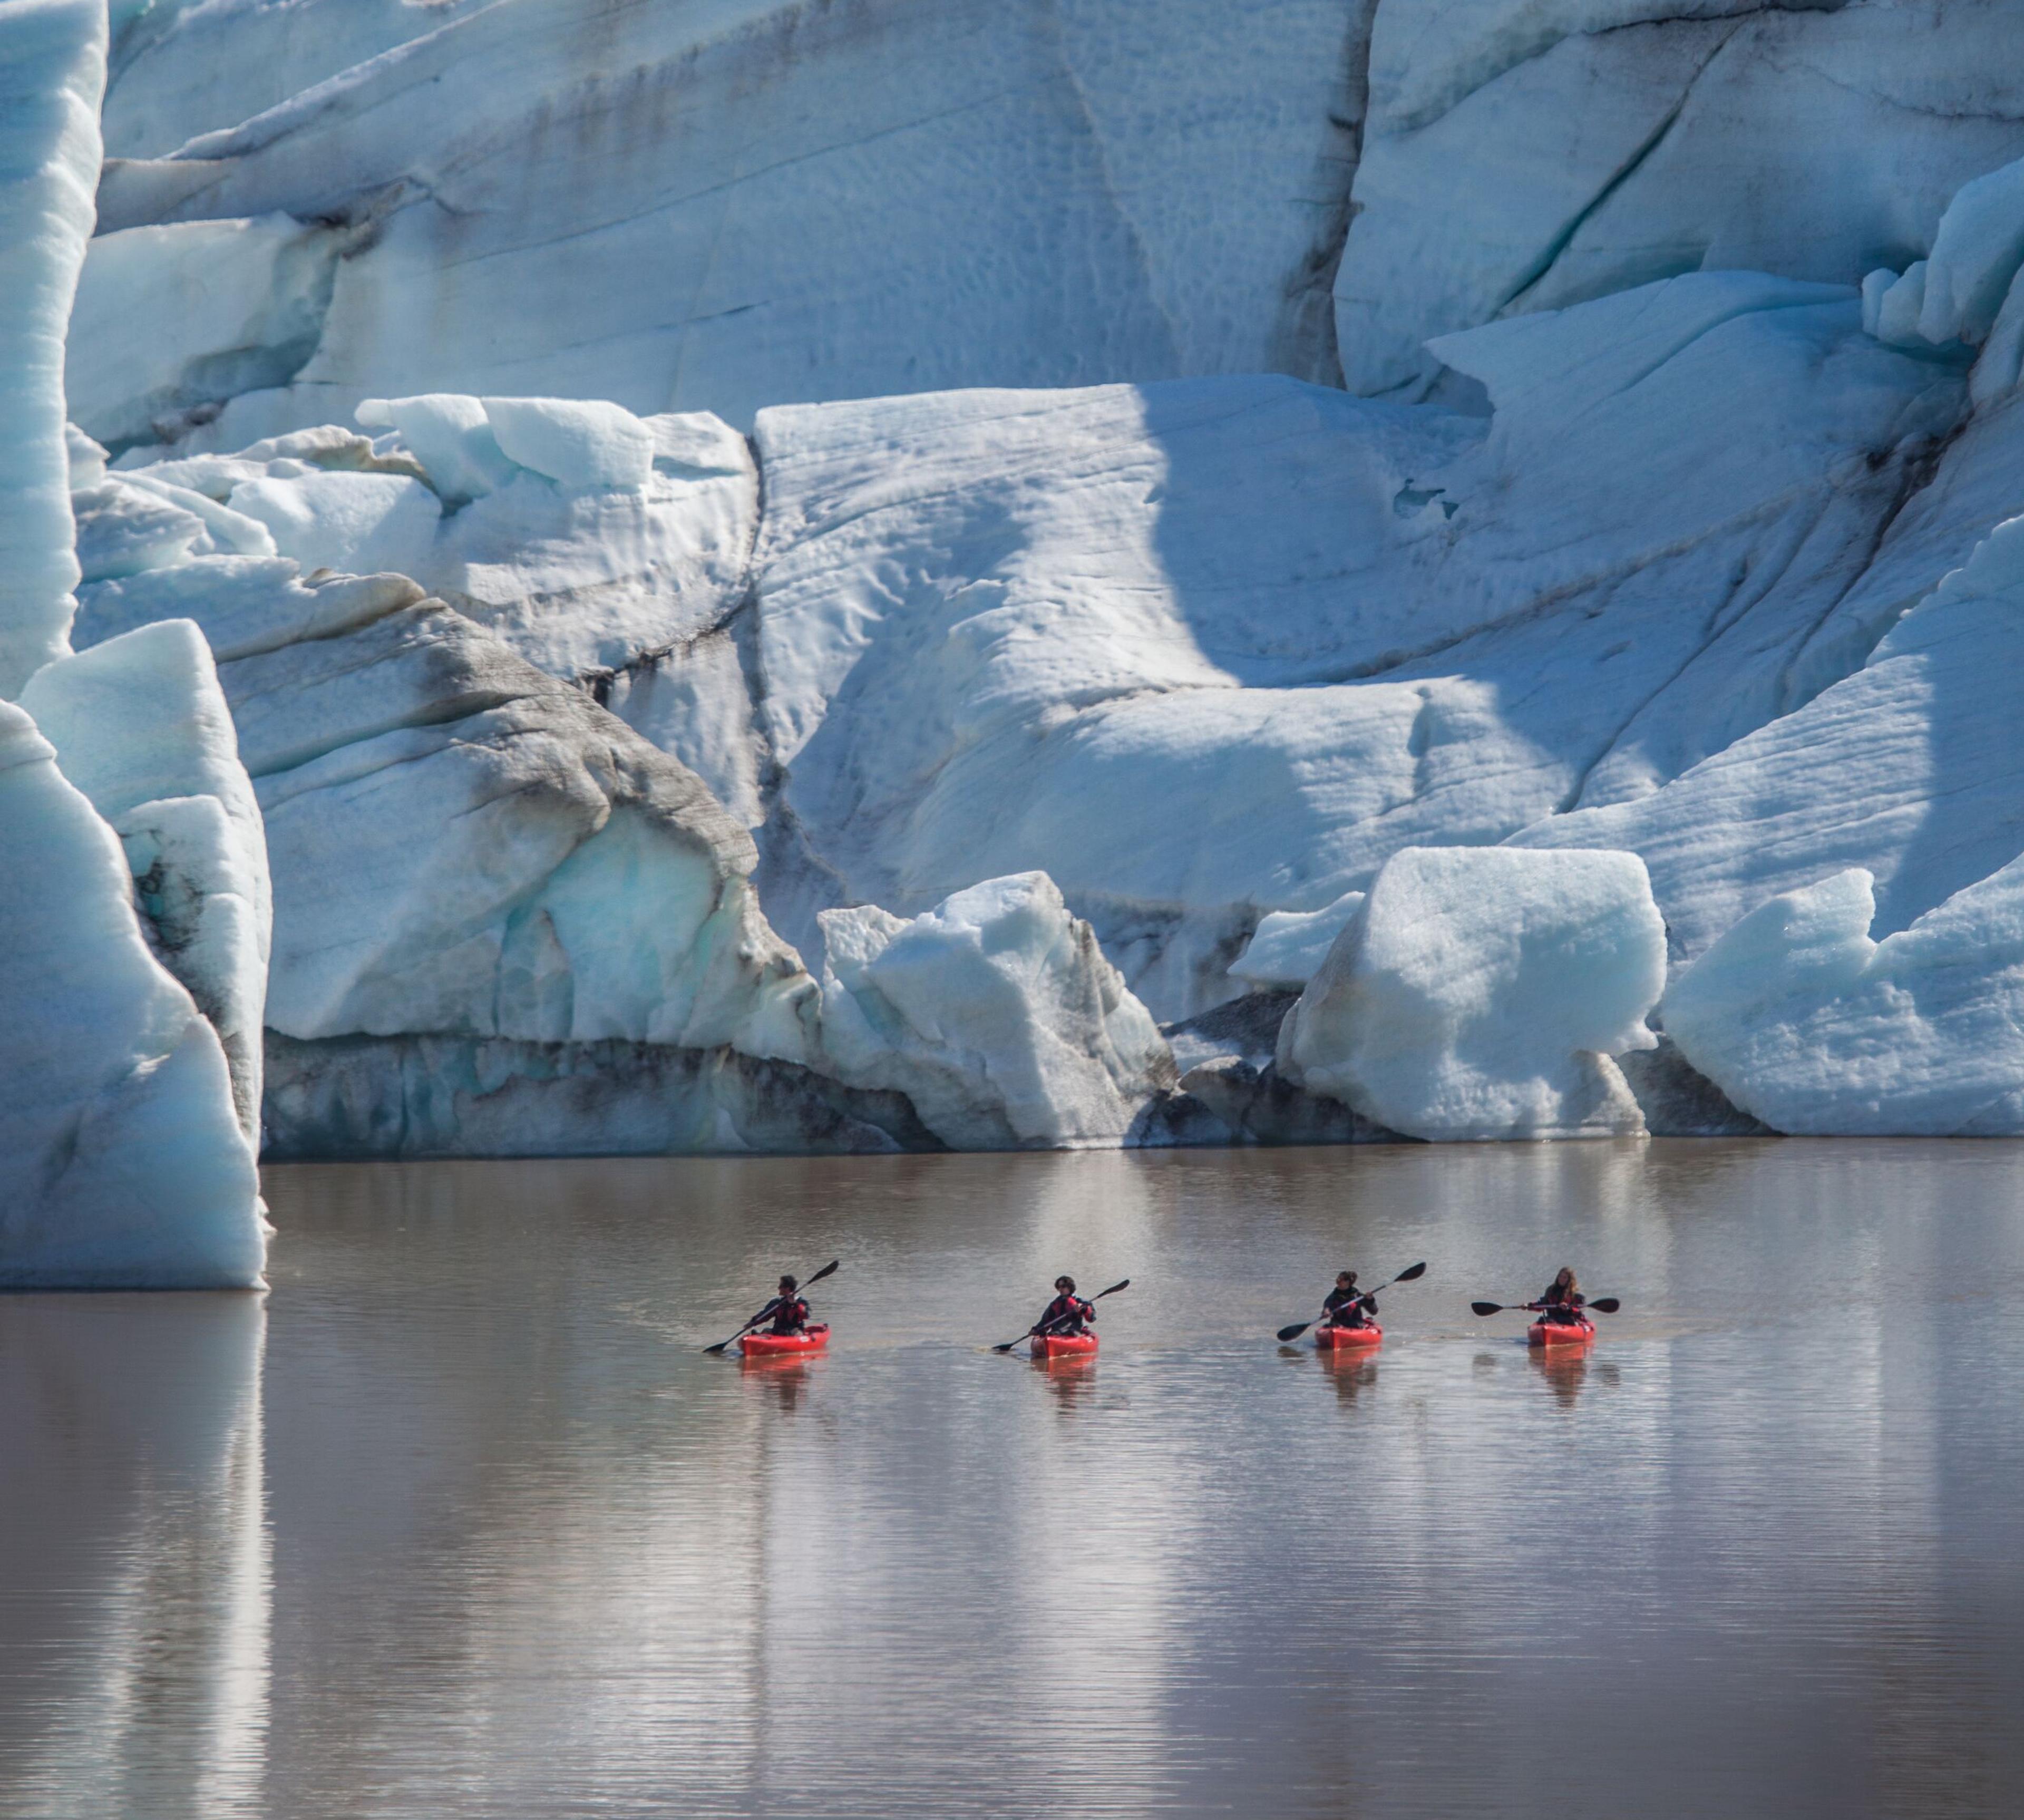 Four kayakers in orange kayaks paddling near large blue glaciers in Iceland.